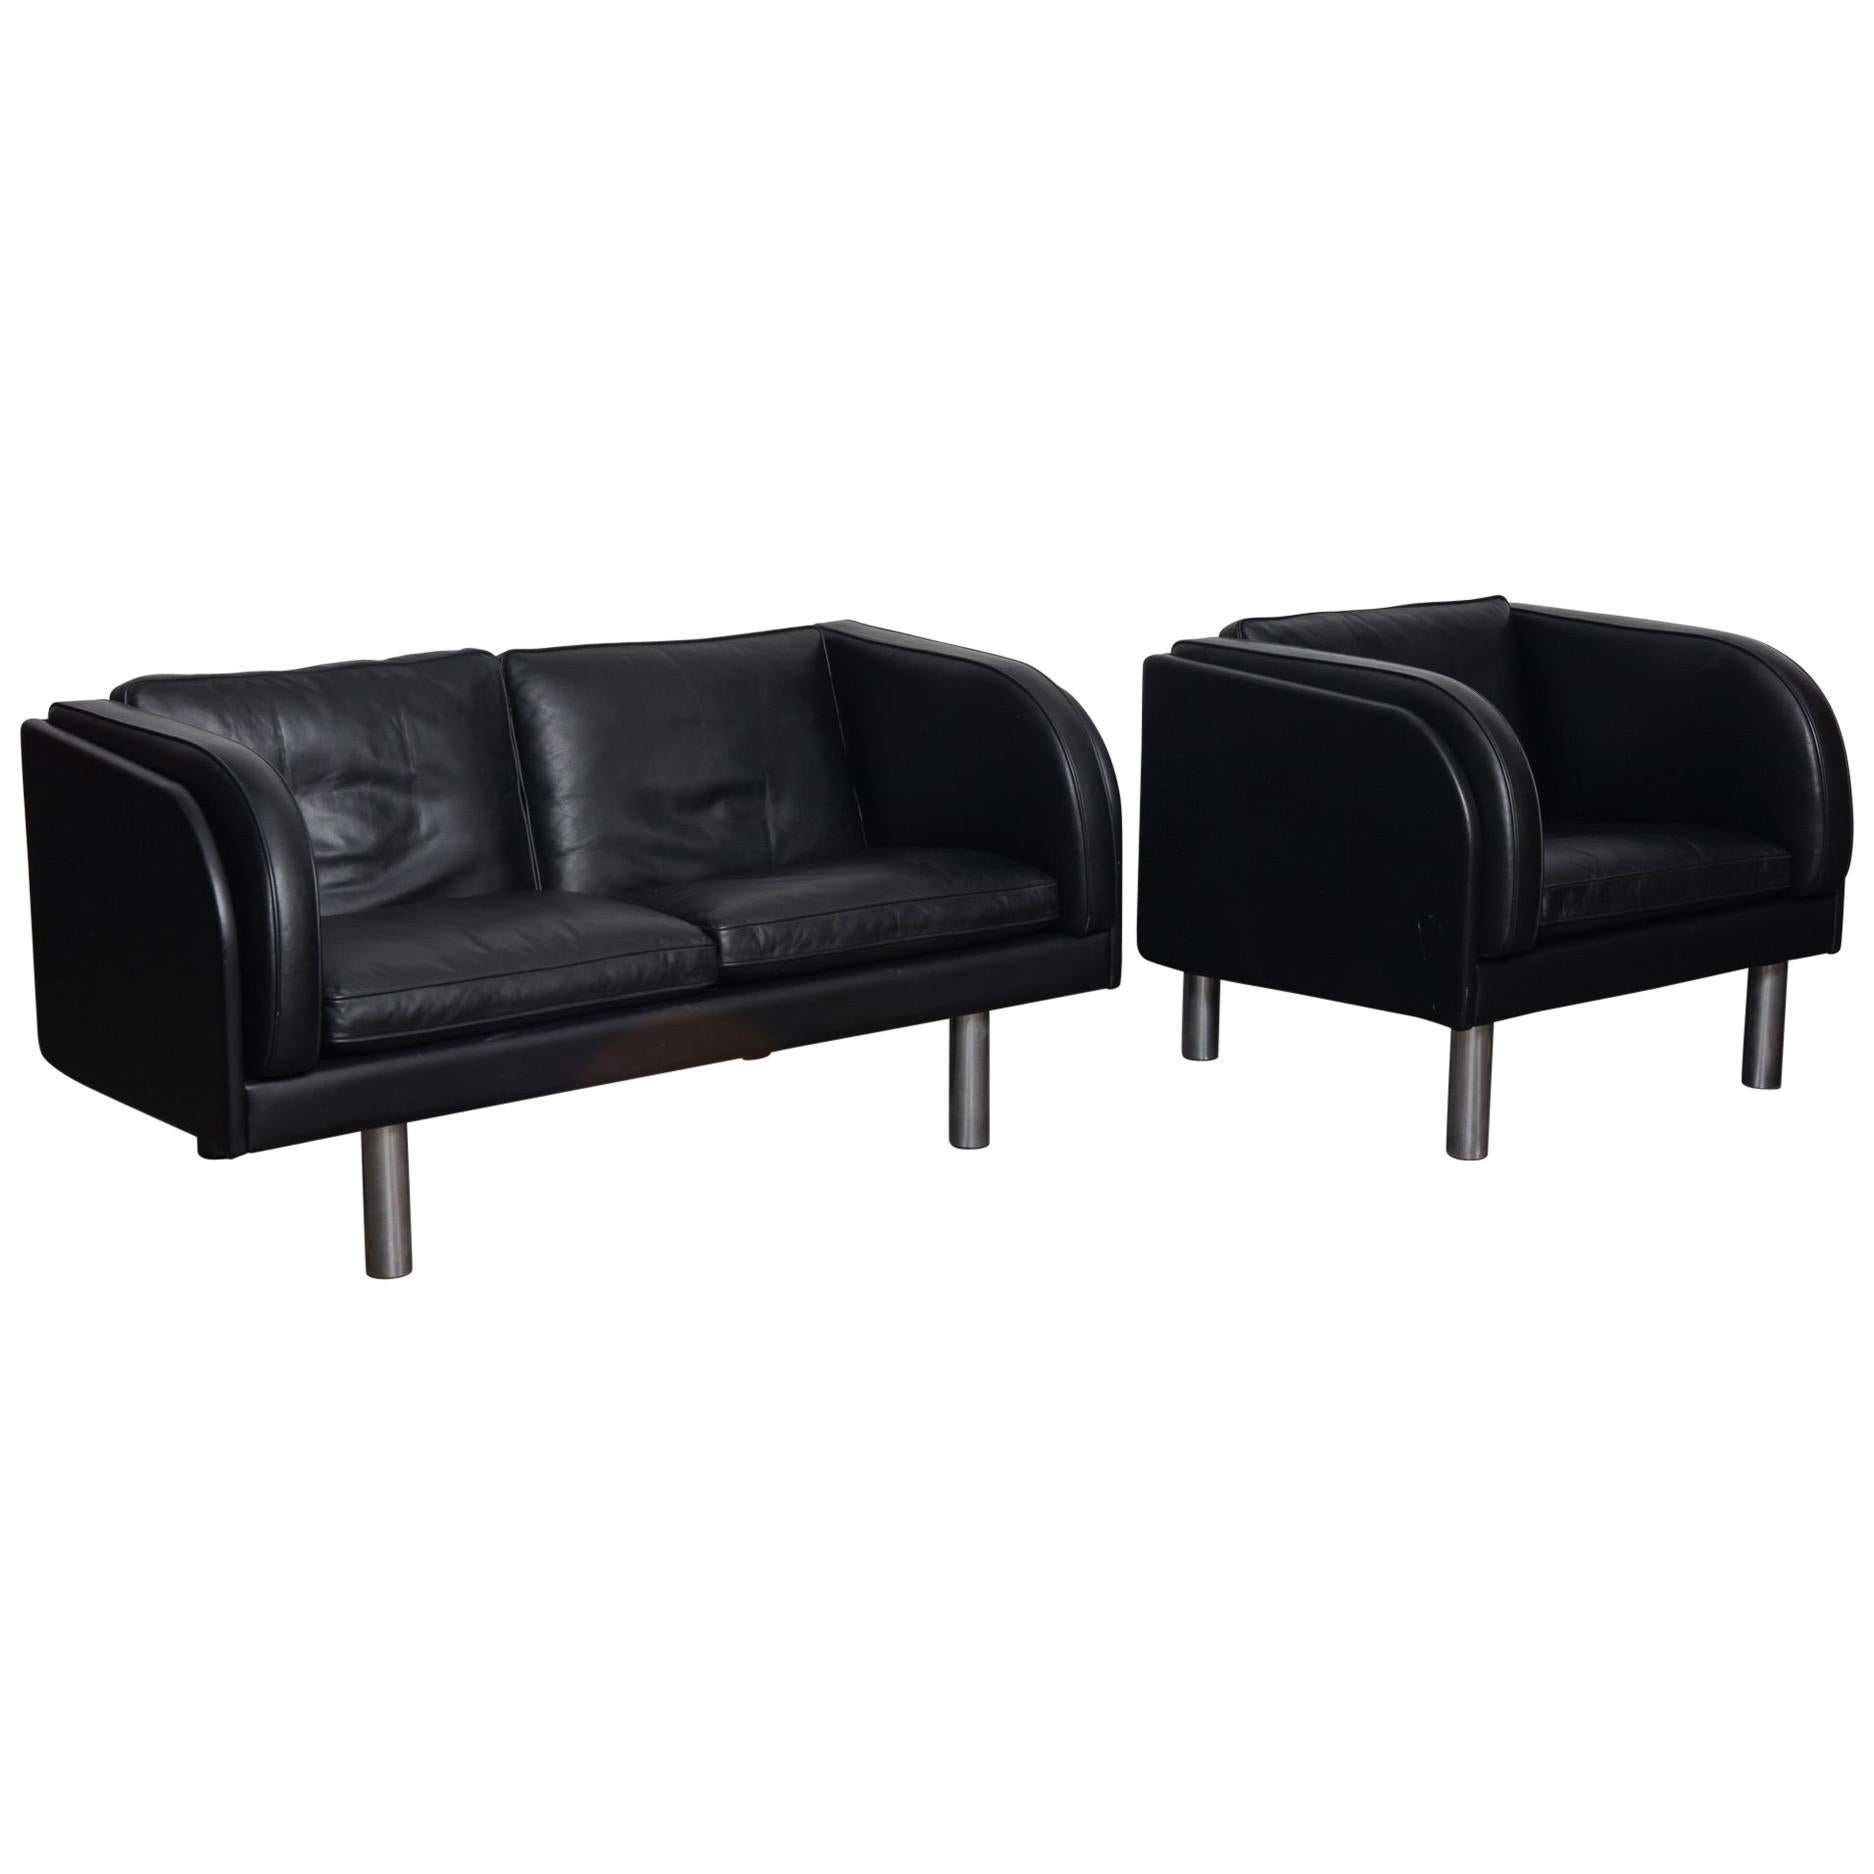 Danish Black Leather Sofa and Chair by Jørgen Gammelgaard for Erik Jørgensen For Sale